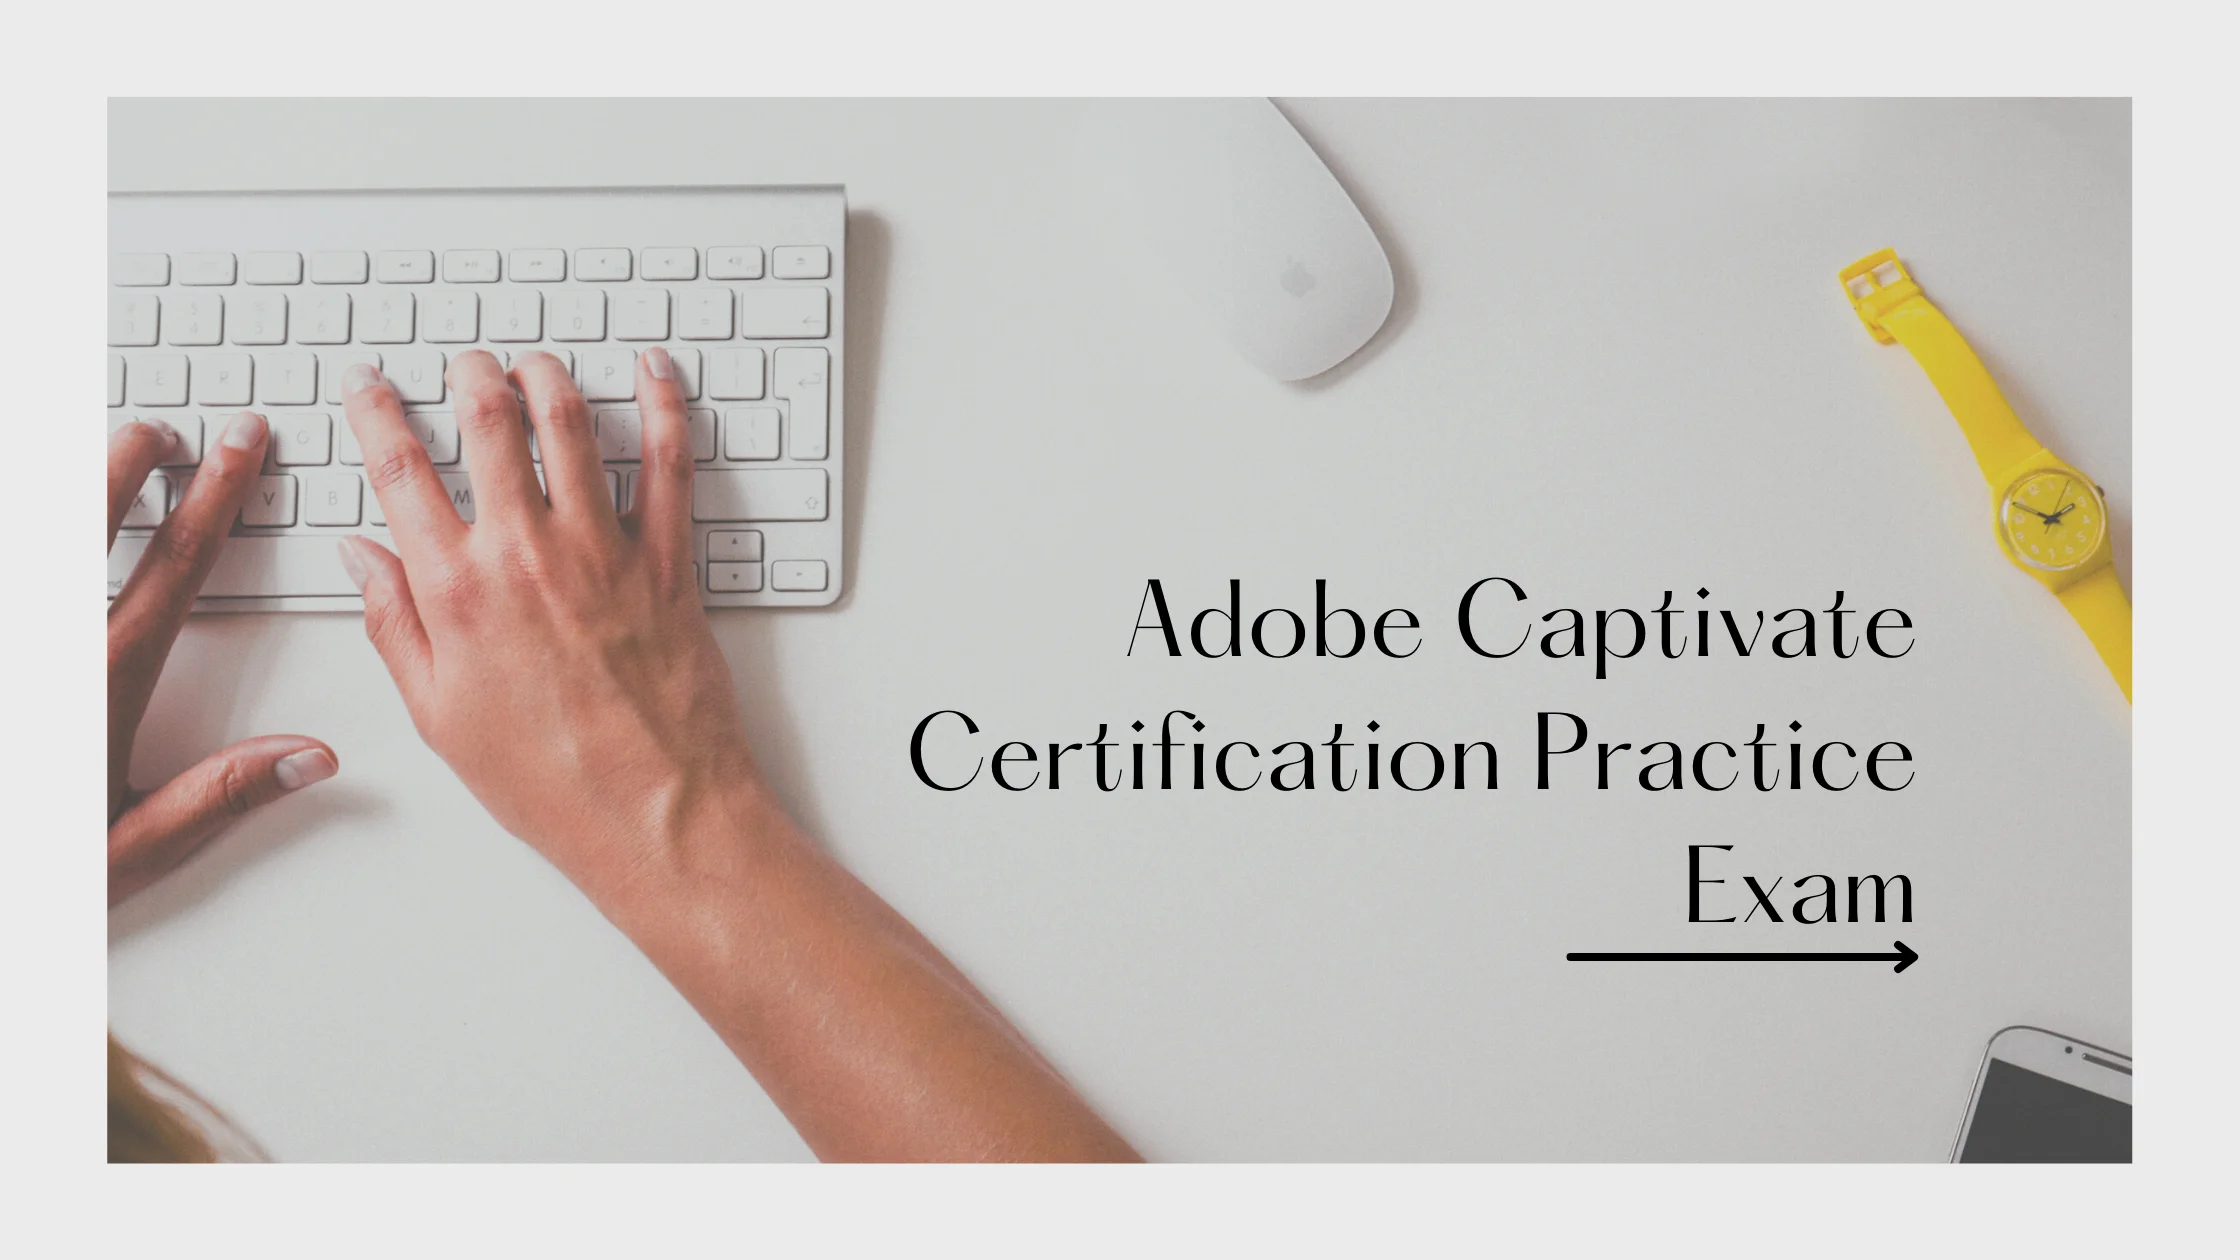 Adobe Captivate Certification Practice Exam